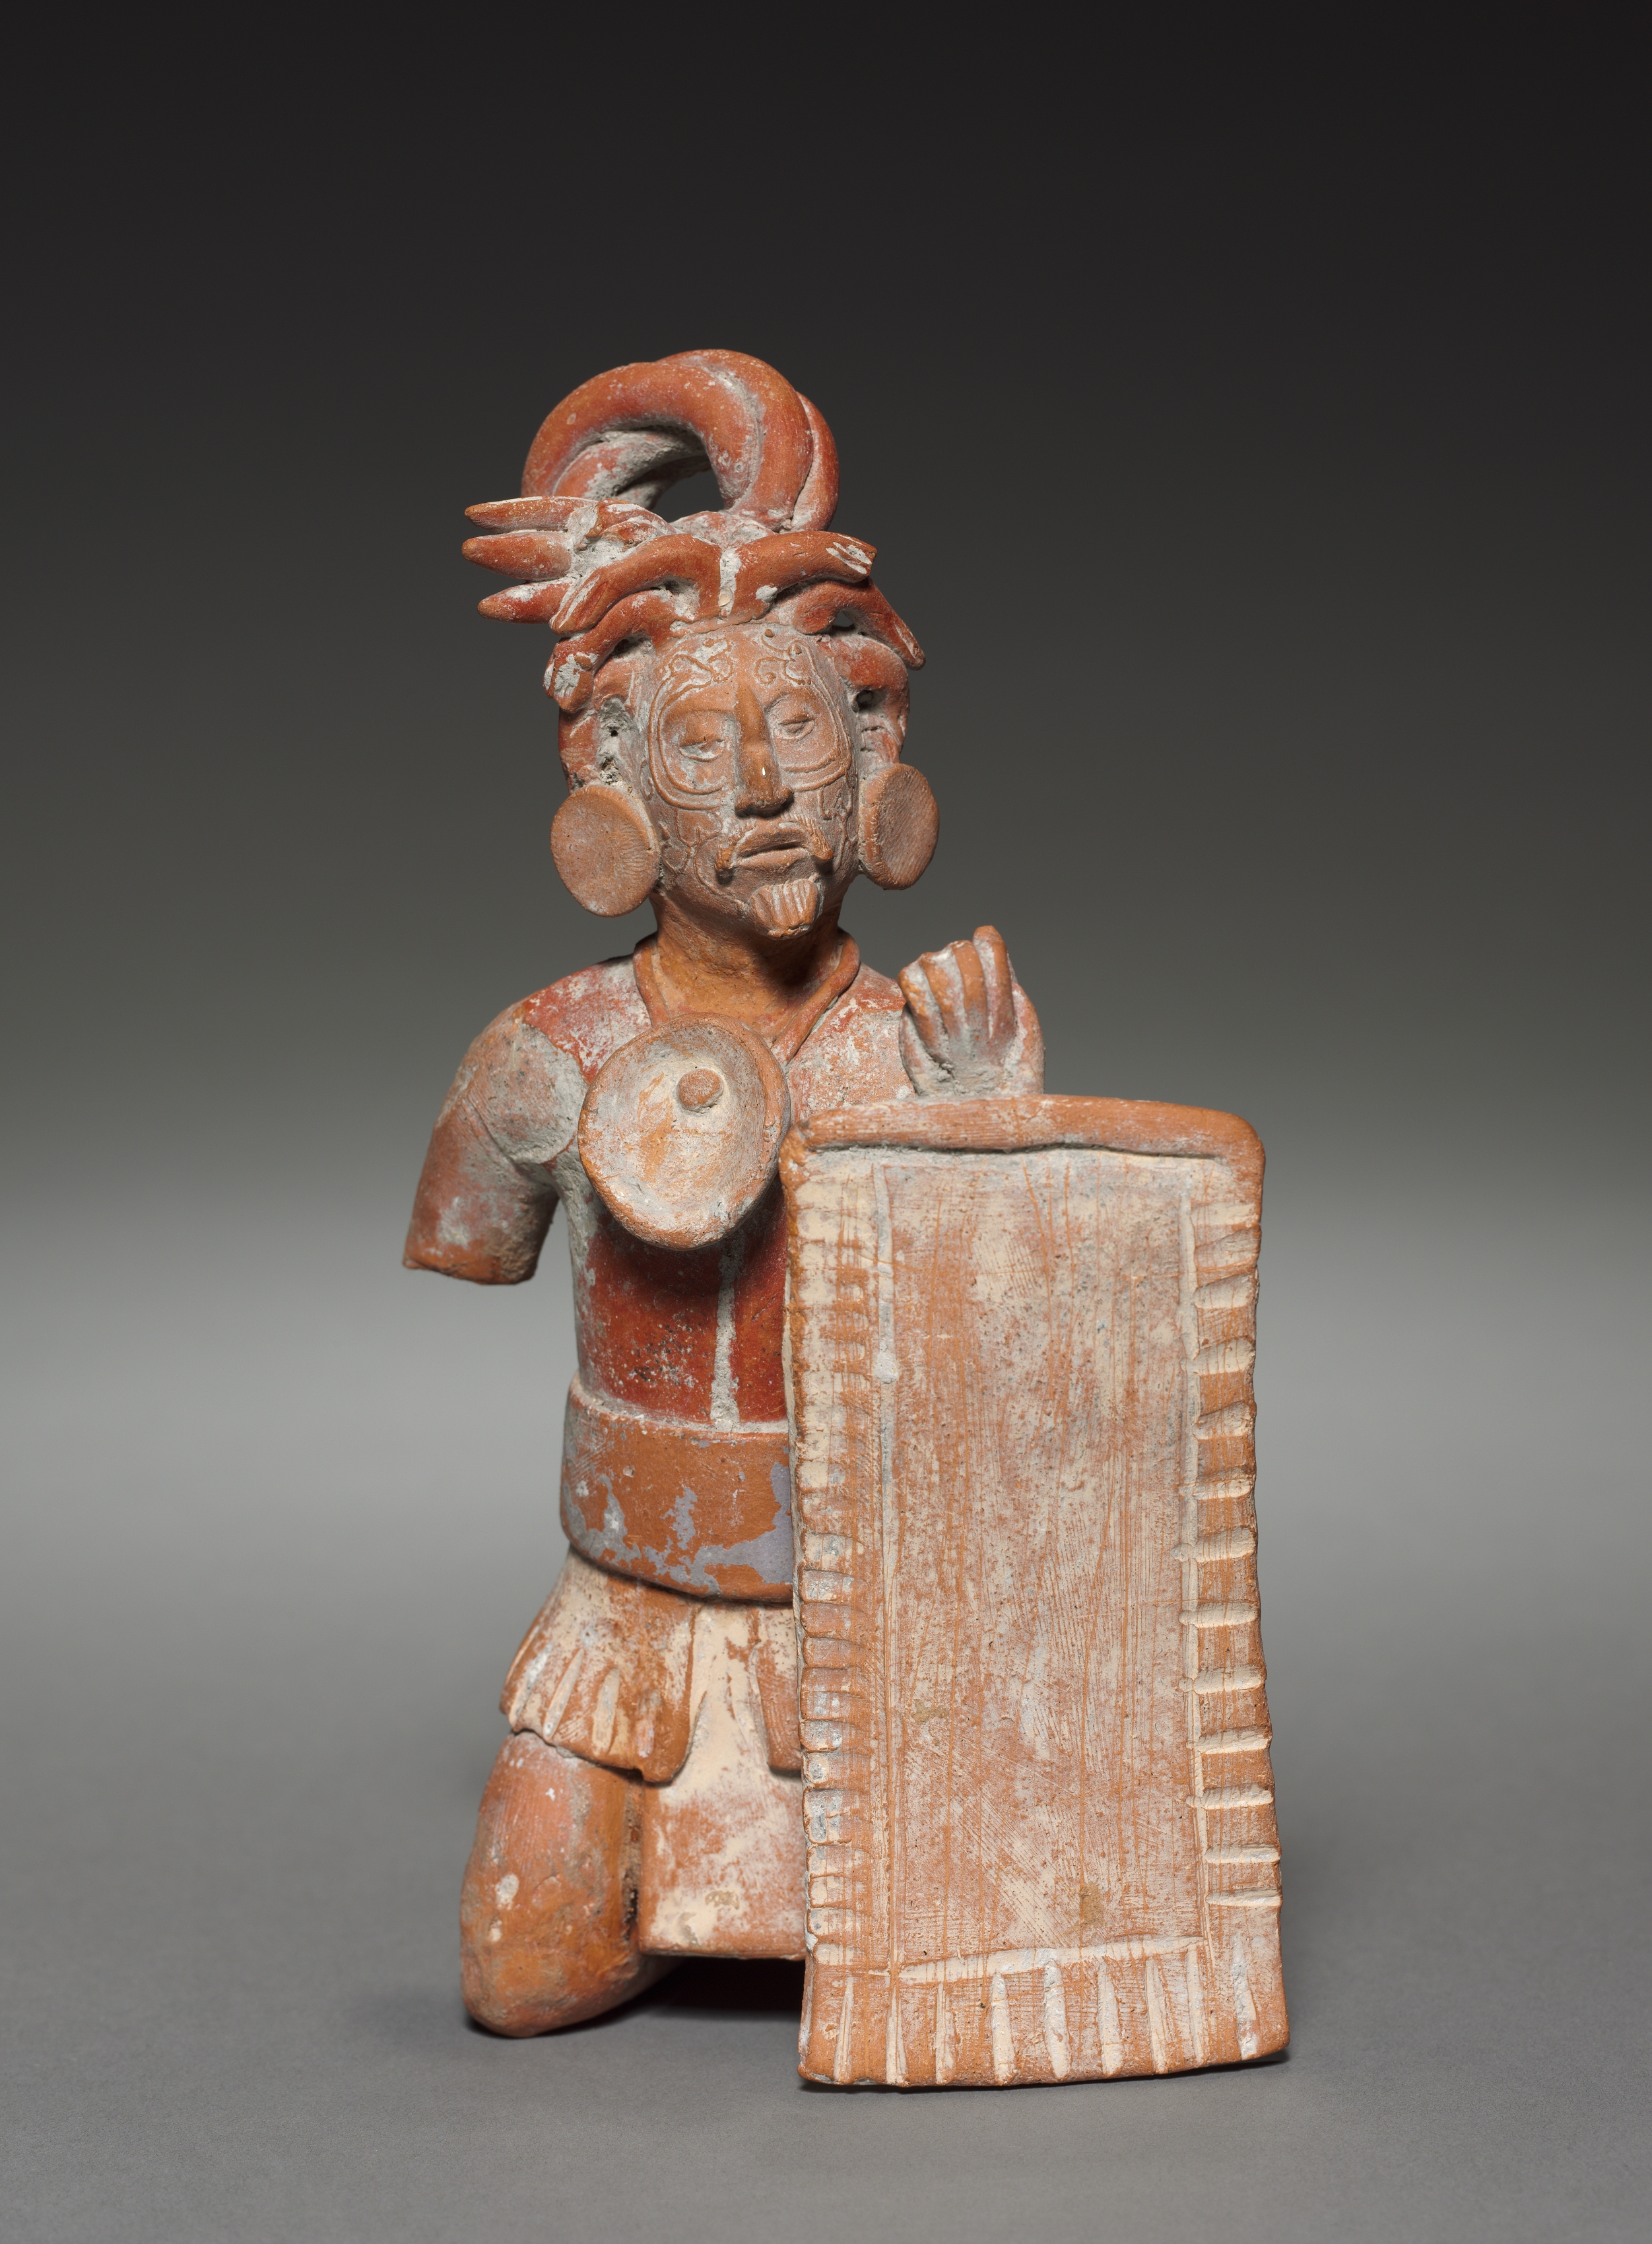 Warrior Figurine with Shield